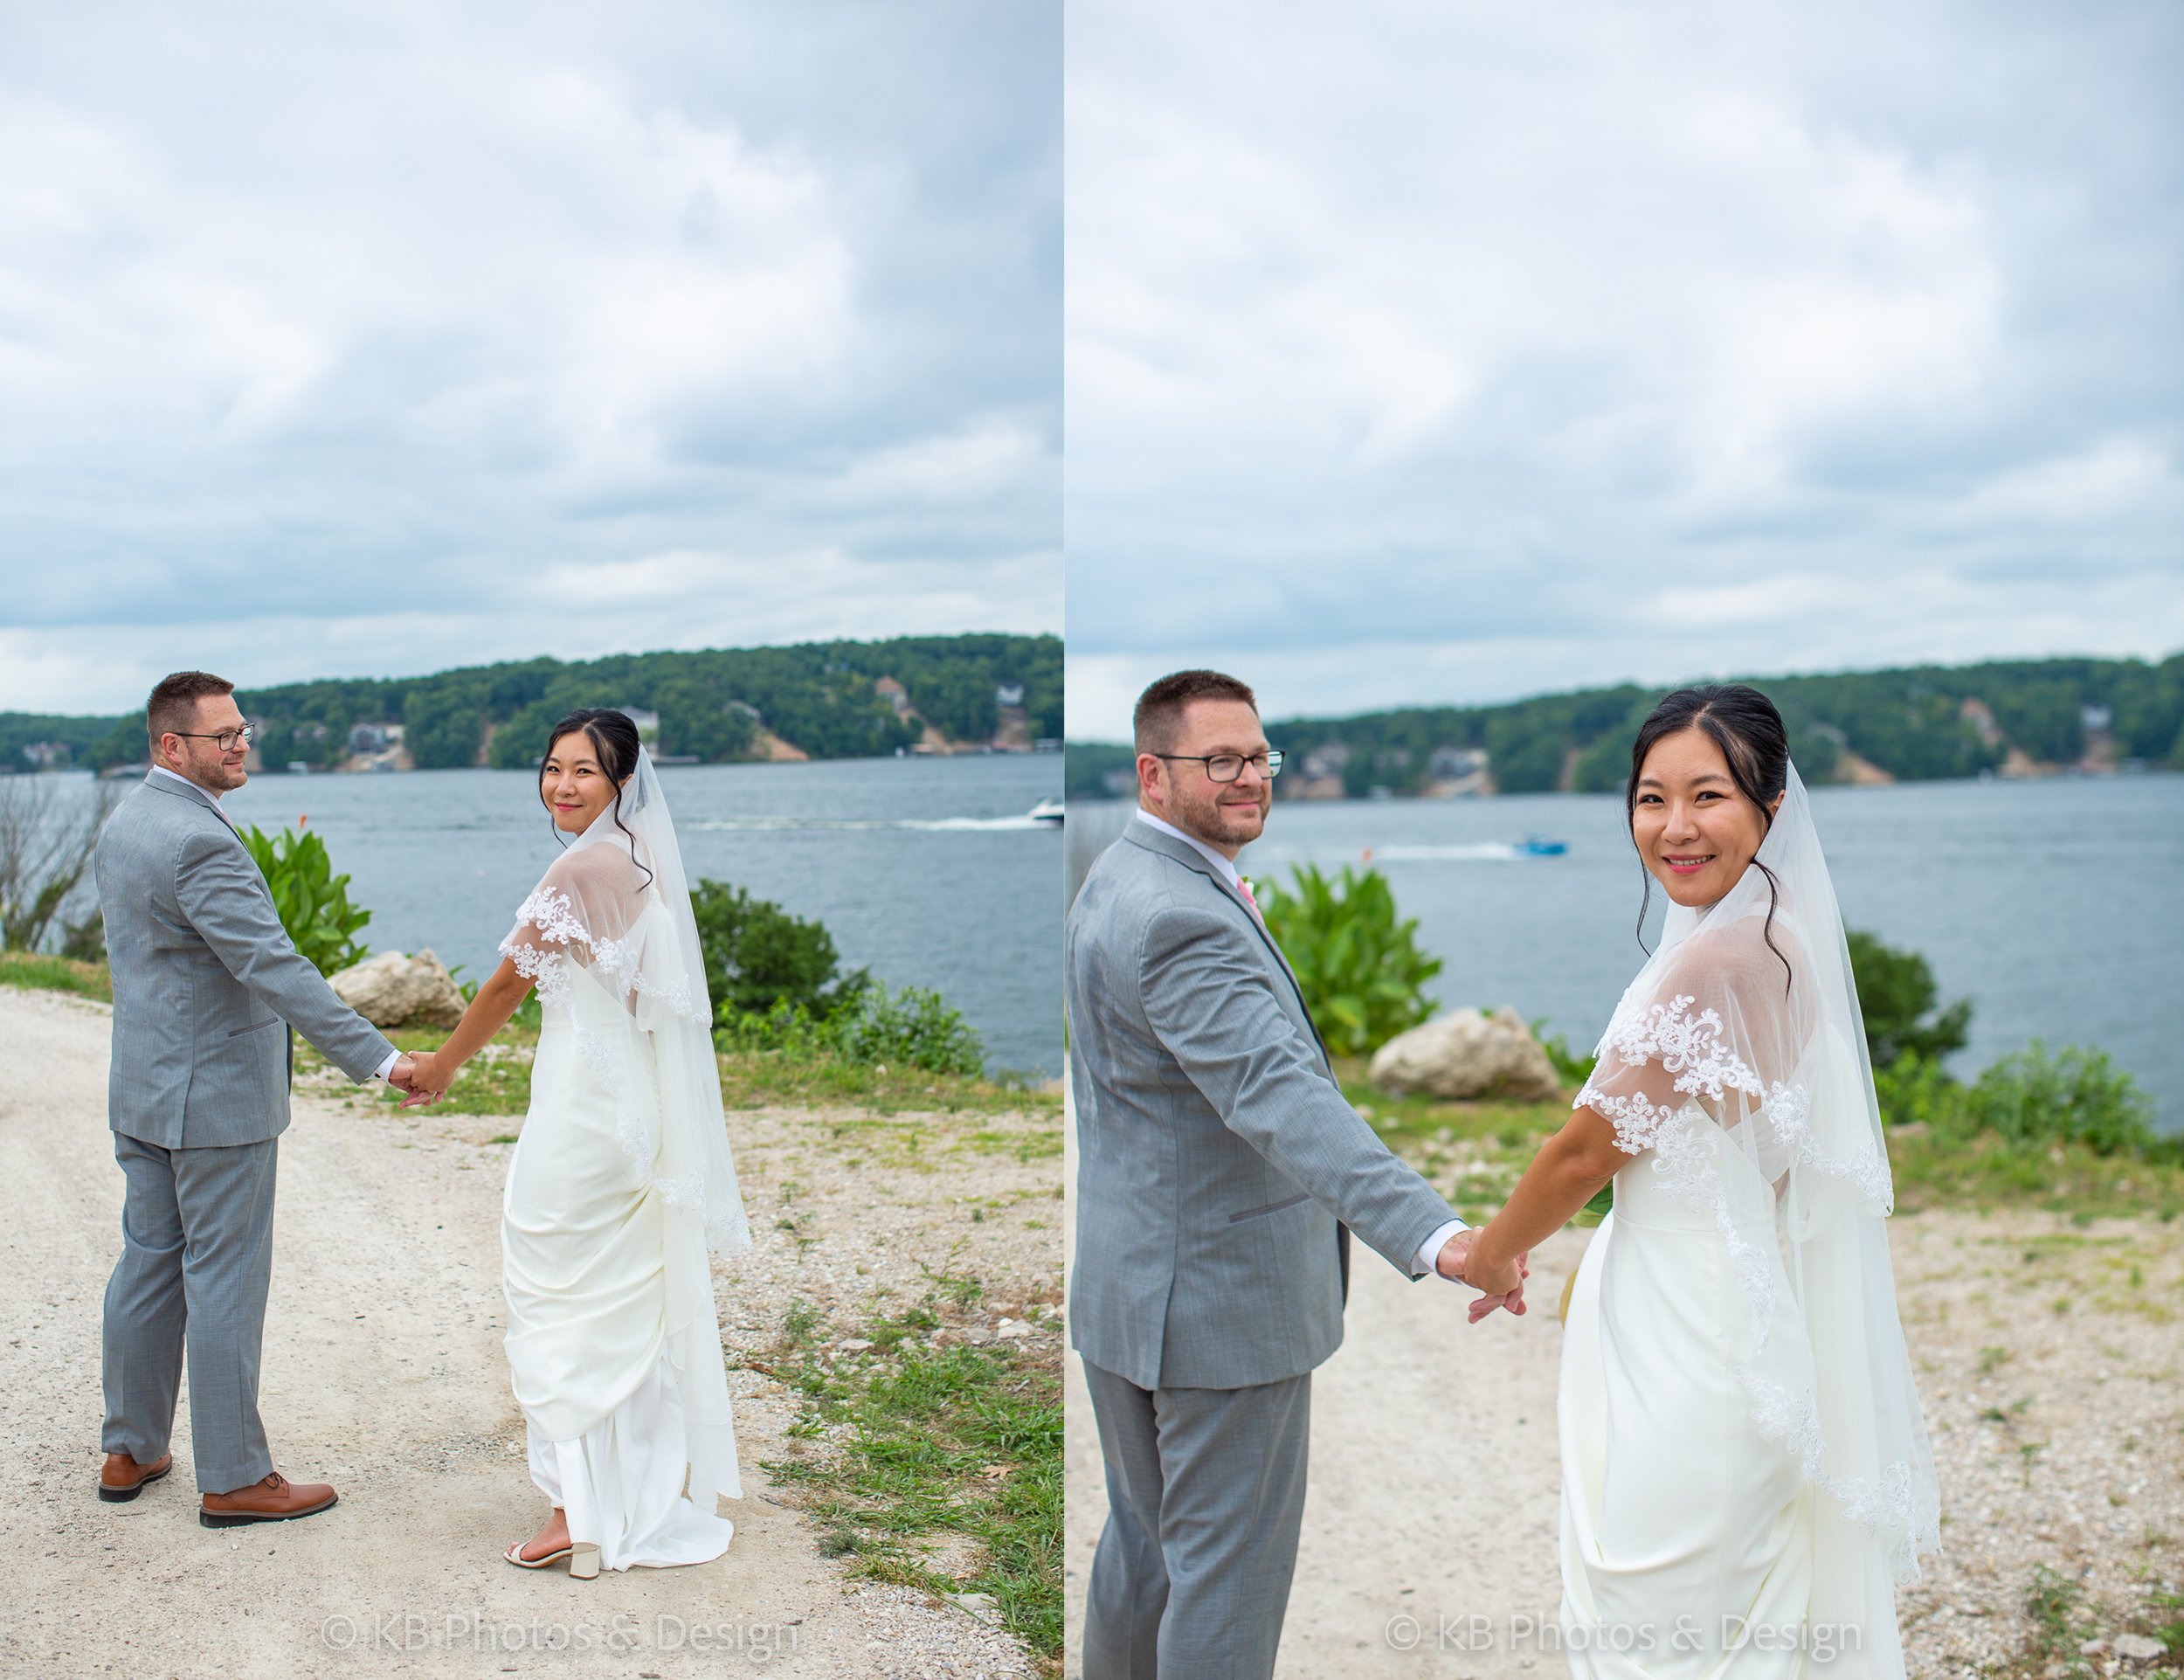 Wedding-Destination-Photography-Lake-of-the-Ozarks-Missouri-Nick_Irene-Jefferson-City-bride-groom-Lodge-of-Four-Seasons-wedding-photographer-KB-Photos-and-Design-413.jpg